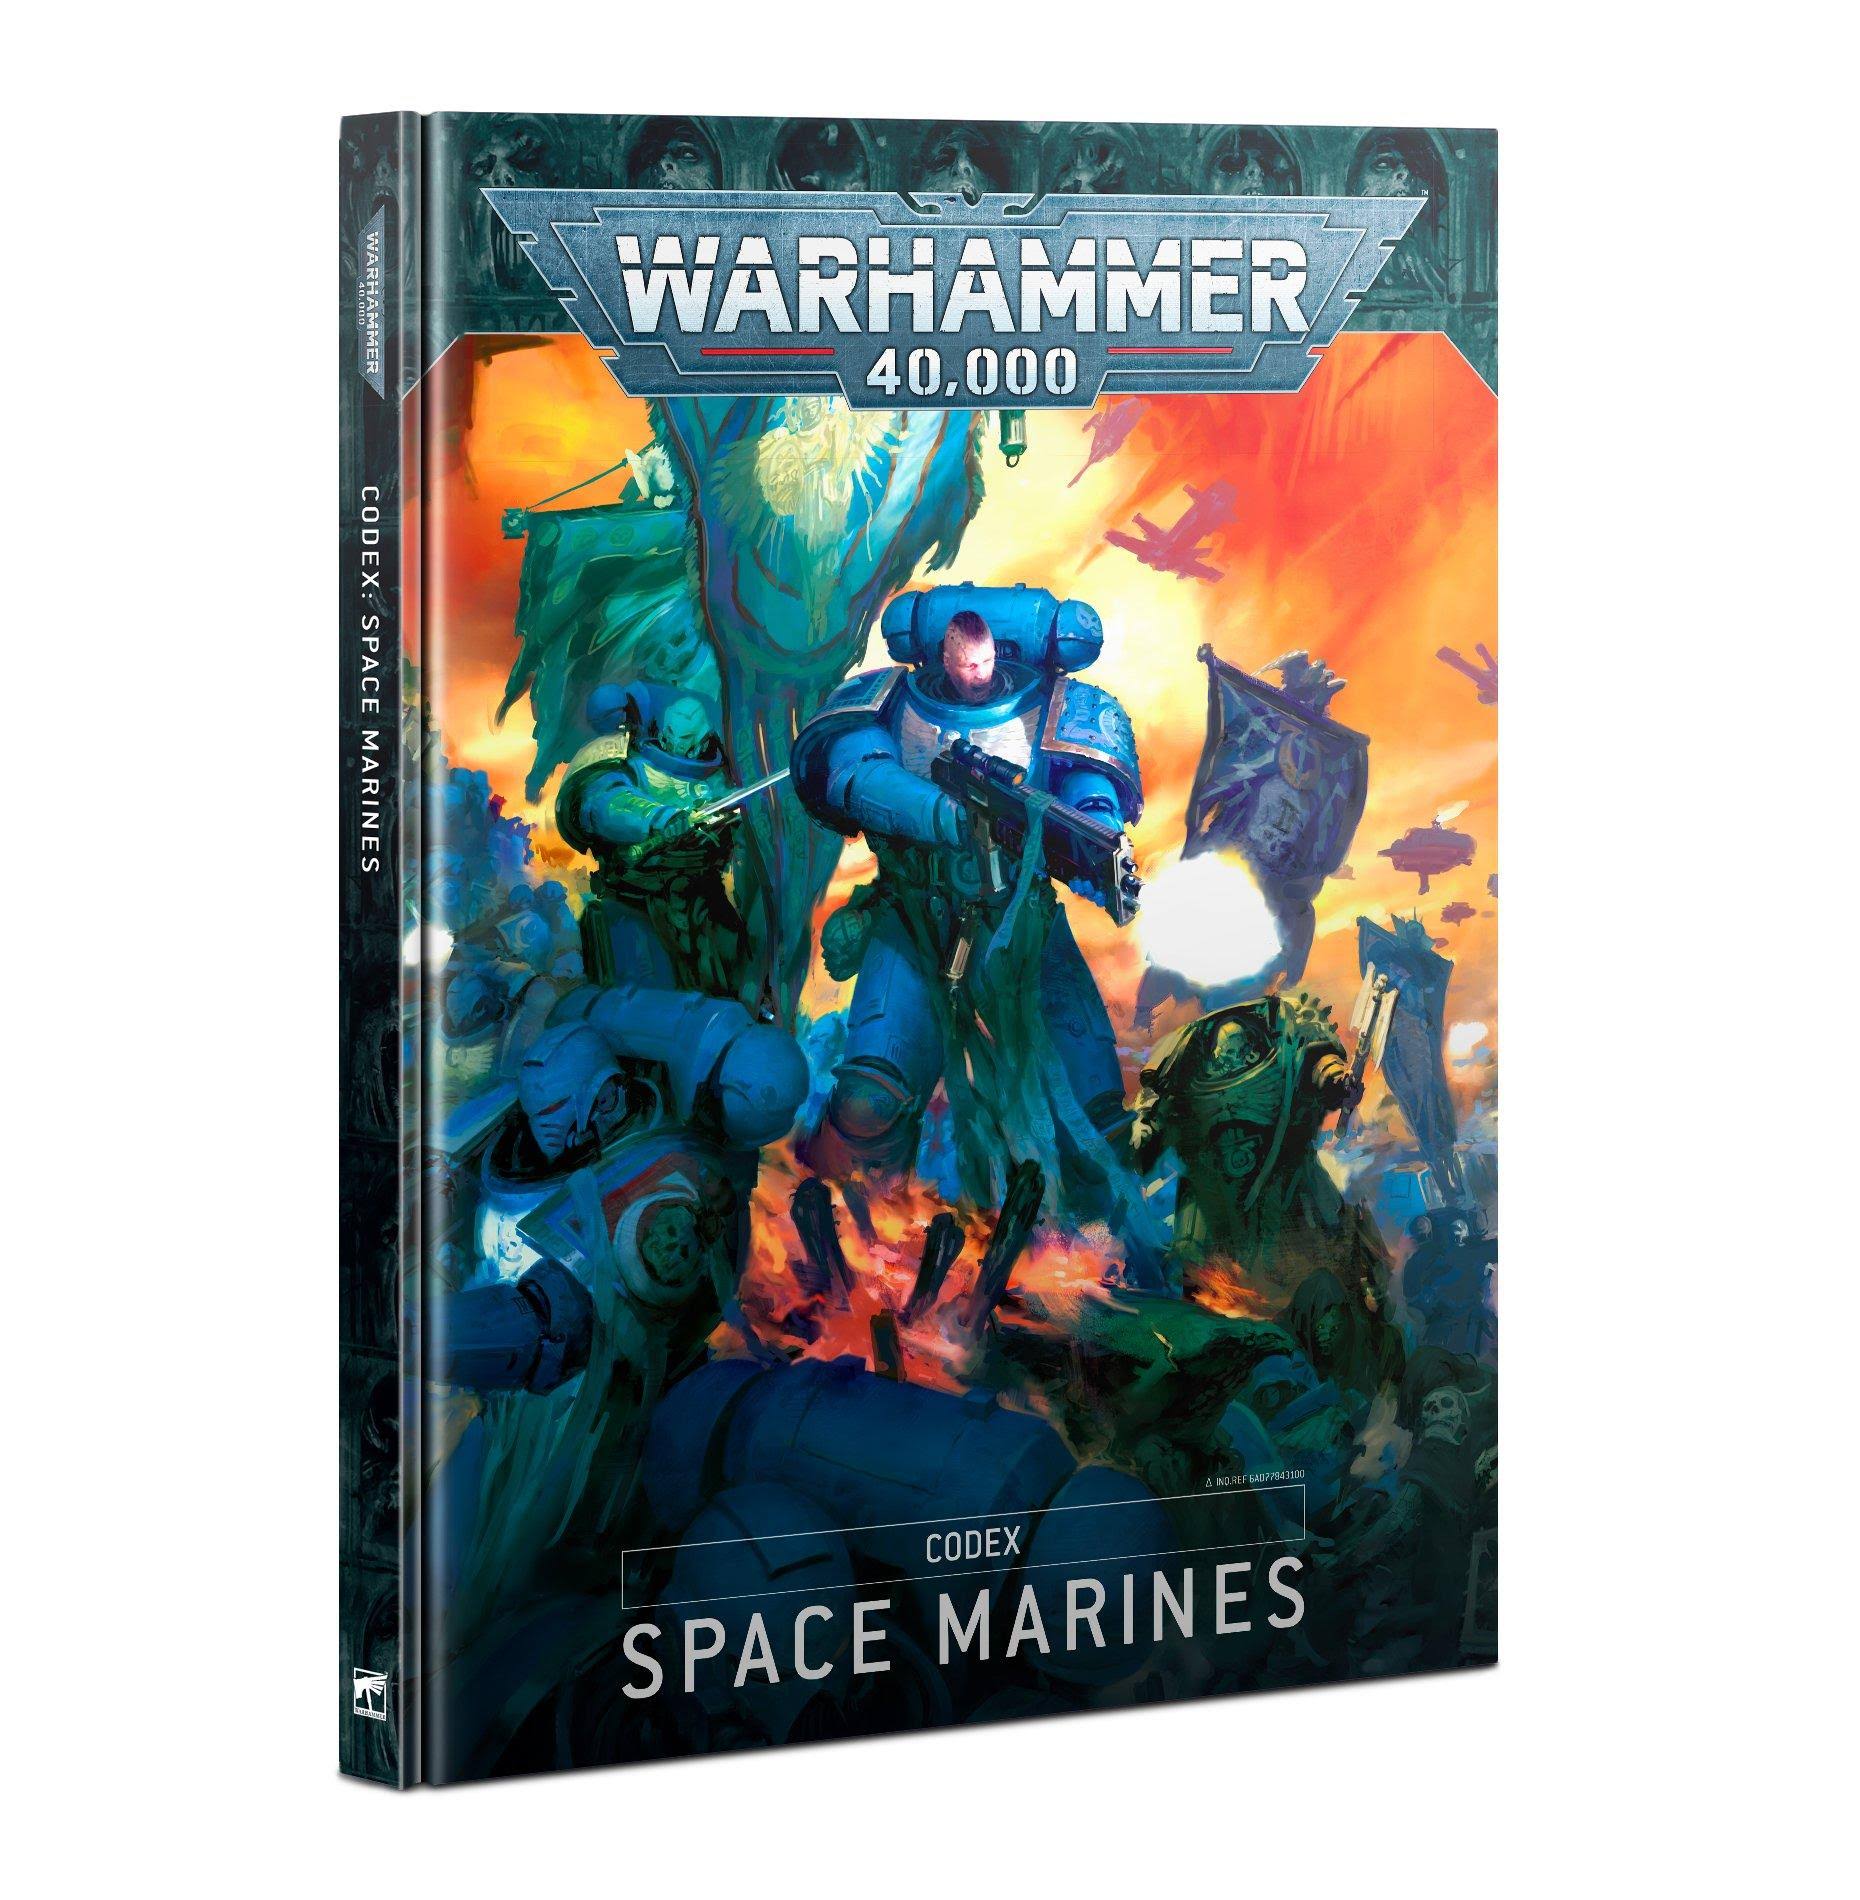 Space Marines [Book]